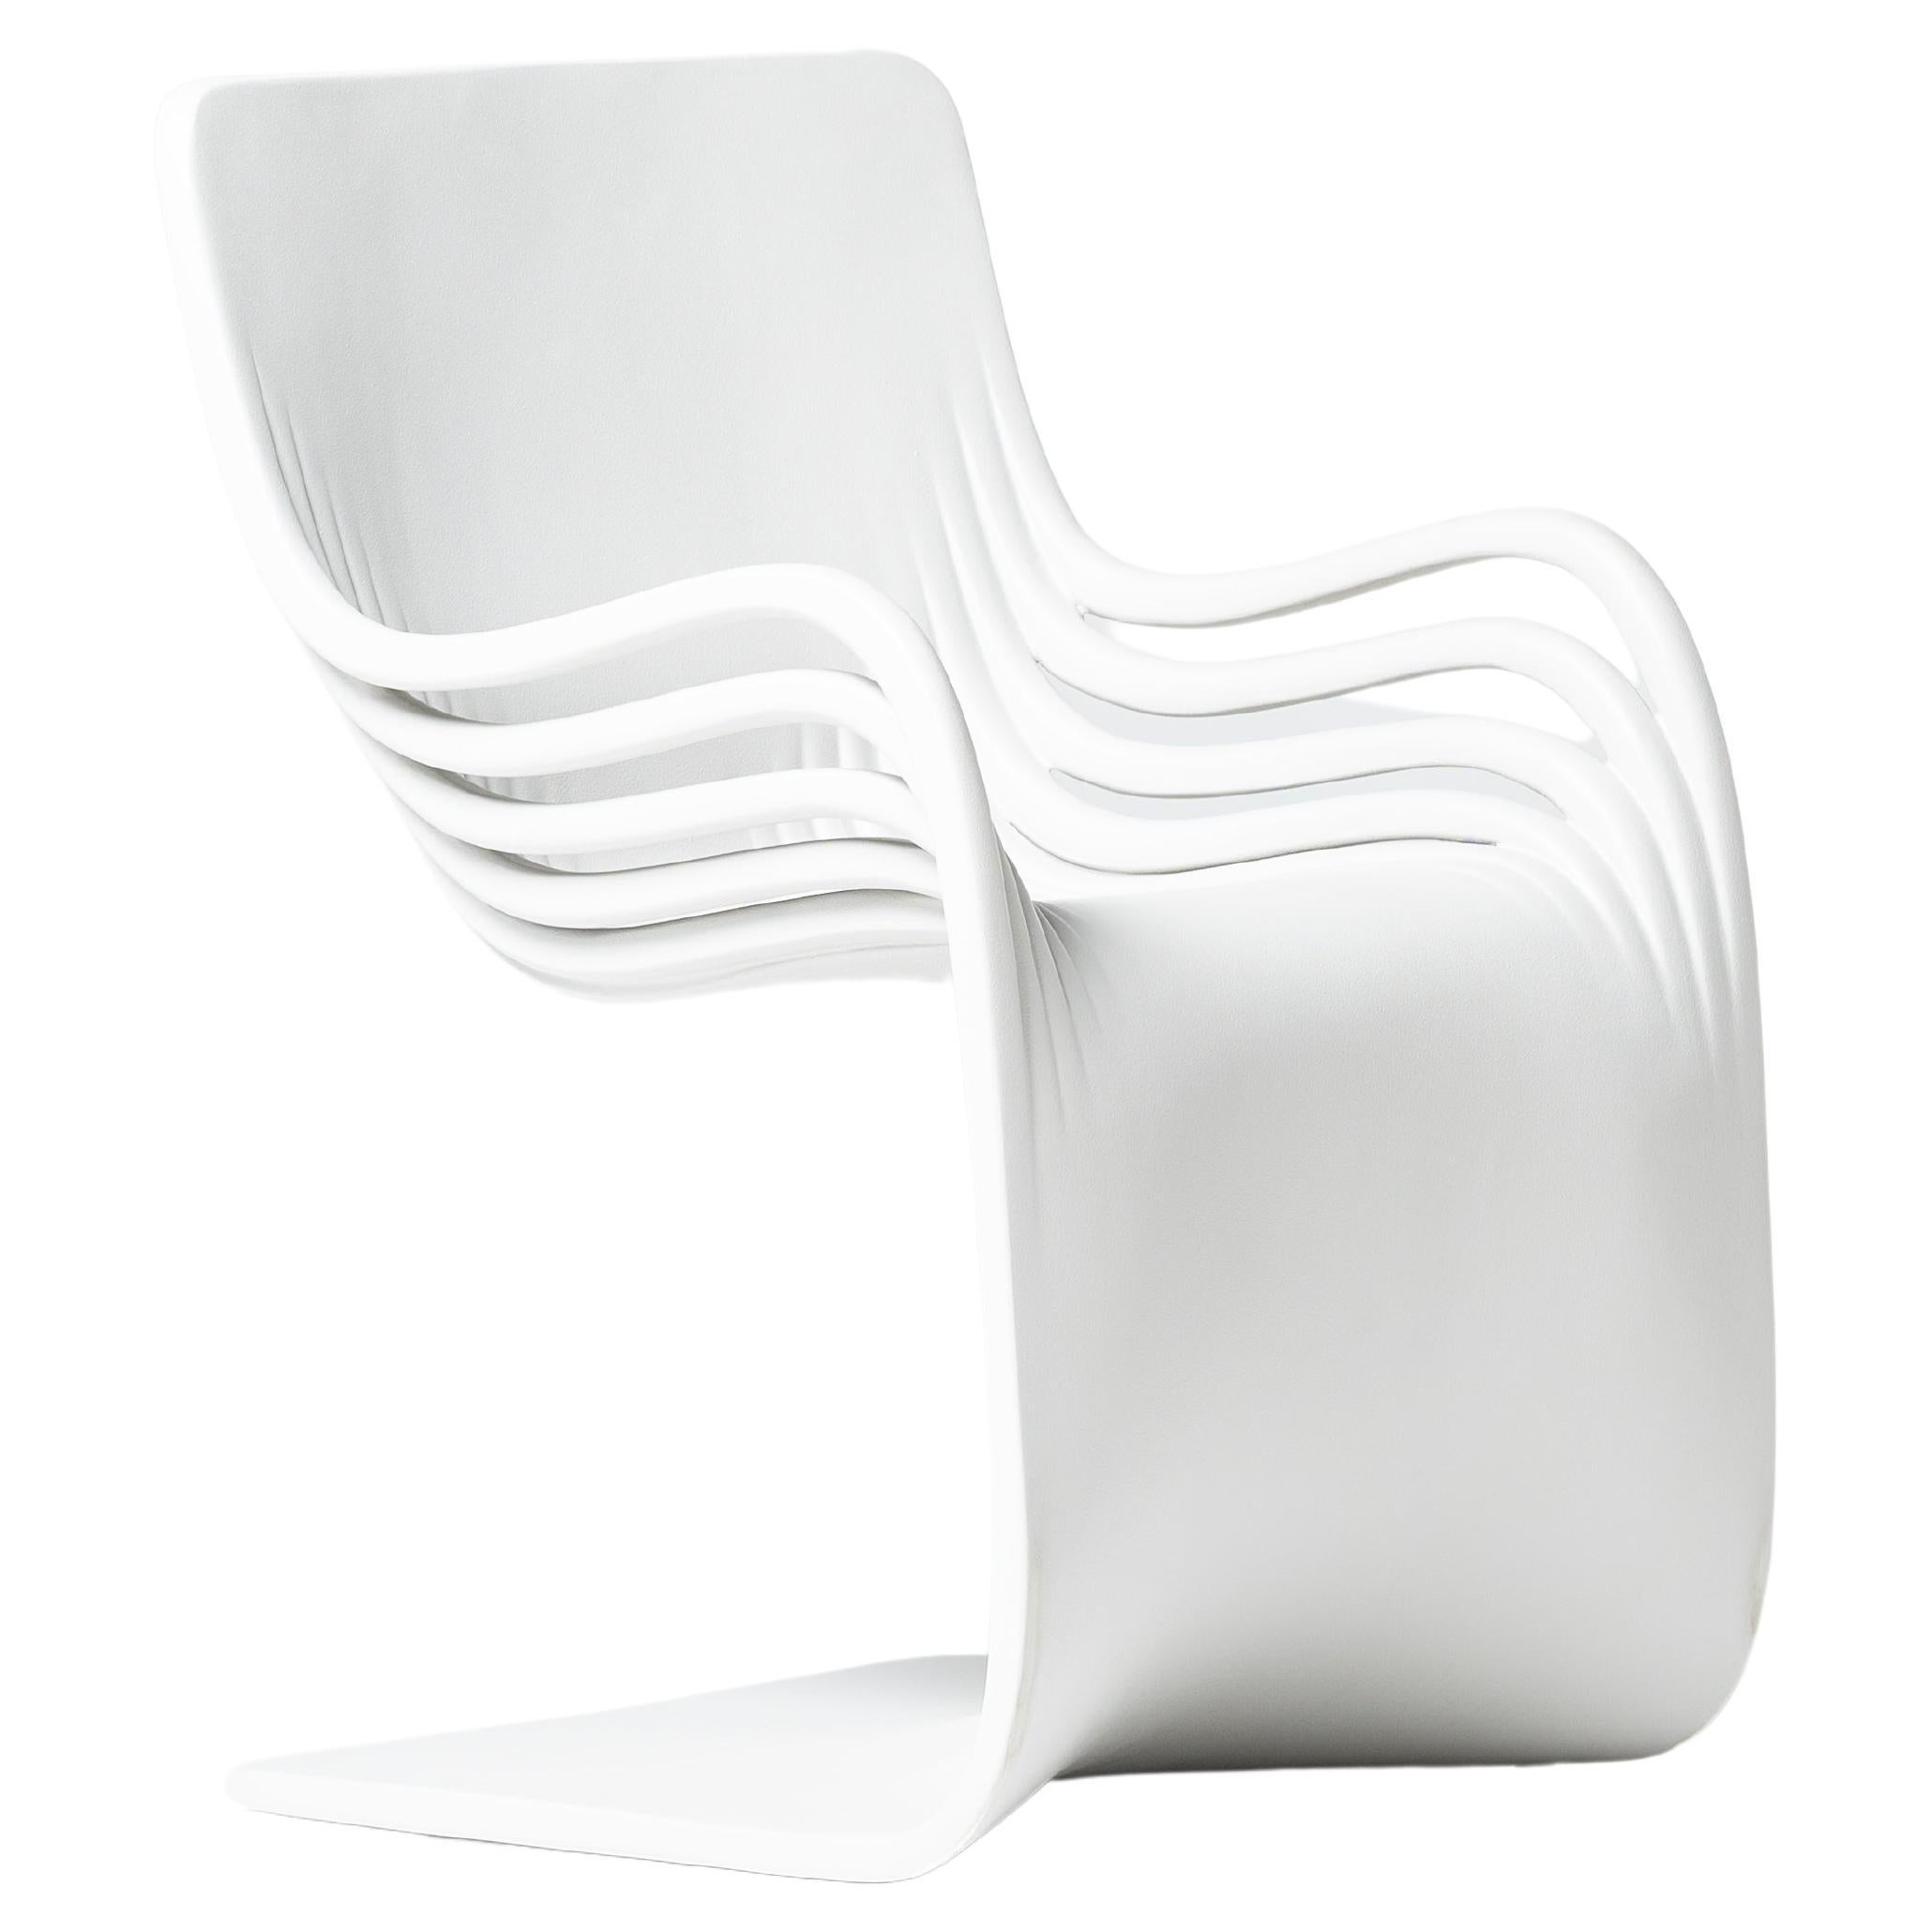  Pipo Fiber by Piegatto, a a Sculptural Contemporary Chair